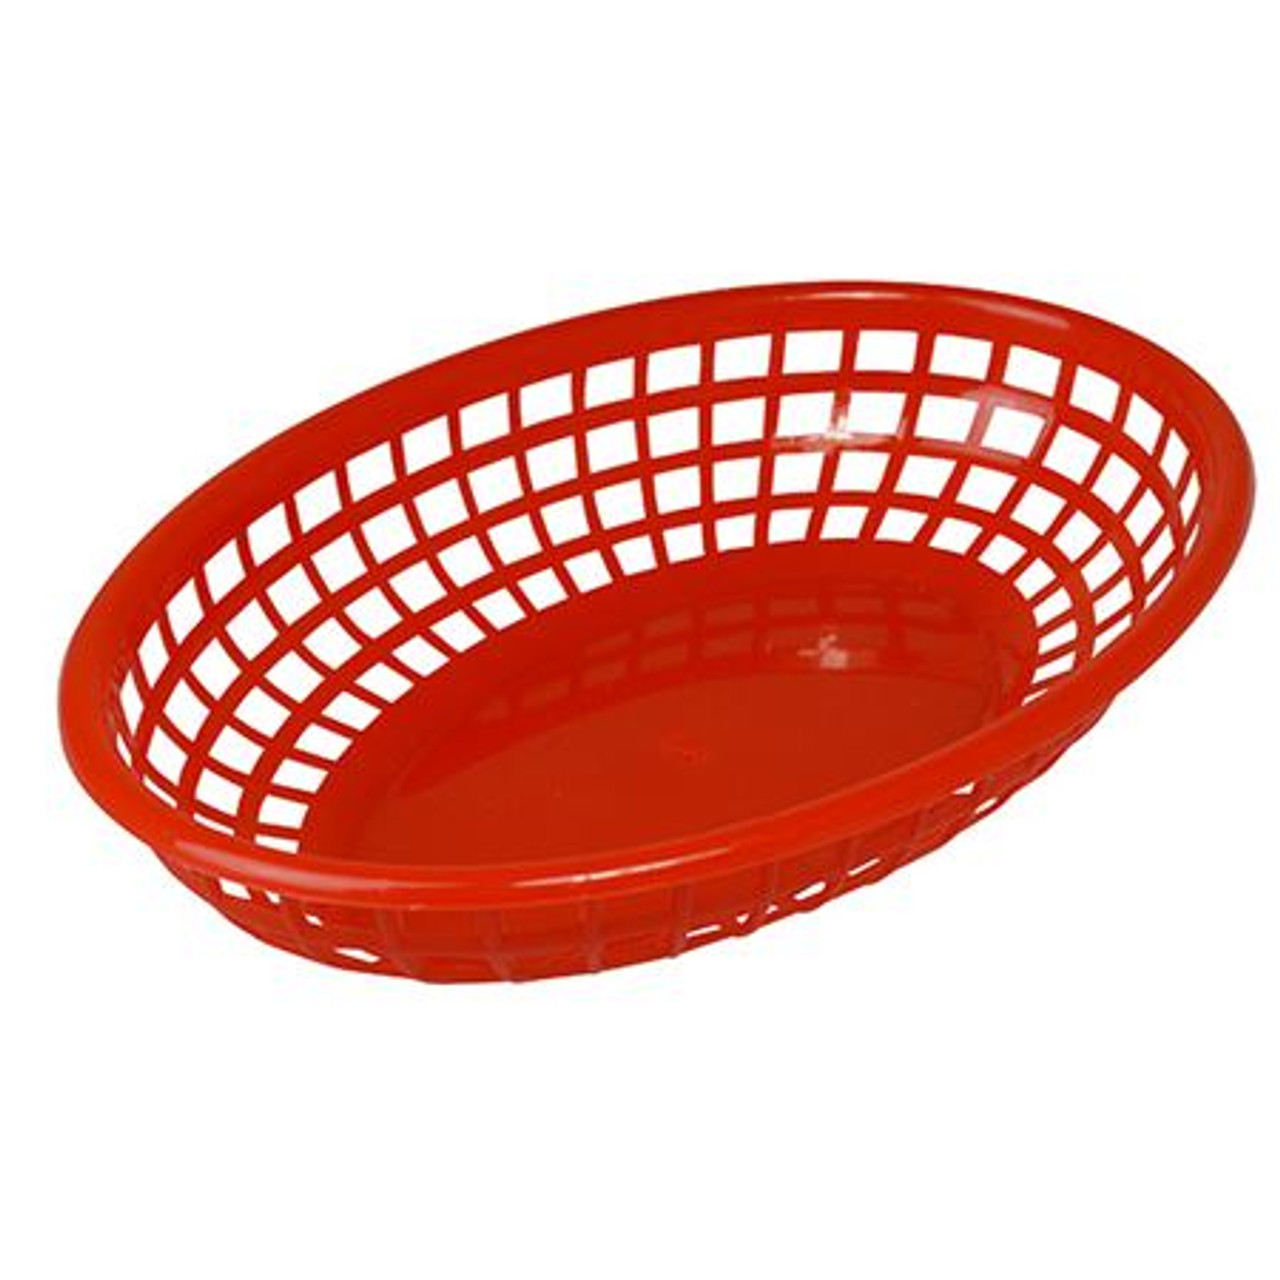 Fast Food Basket  Red  23cm x 15cm